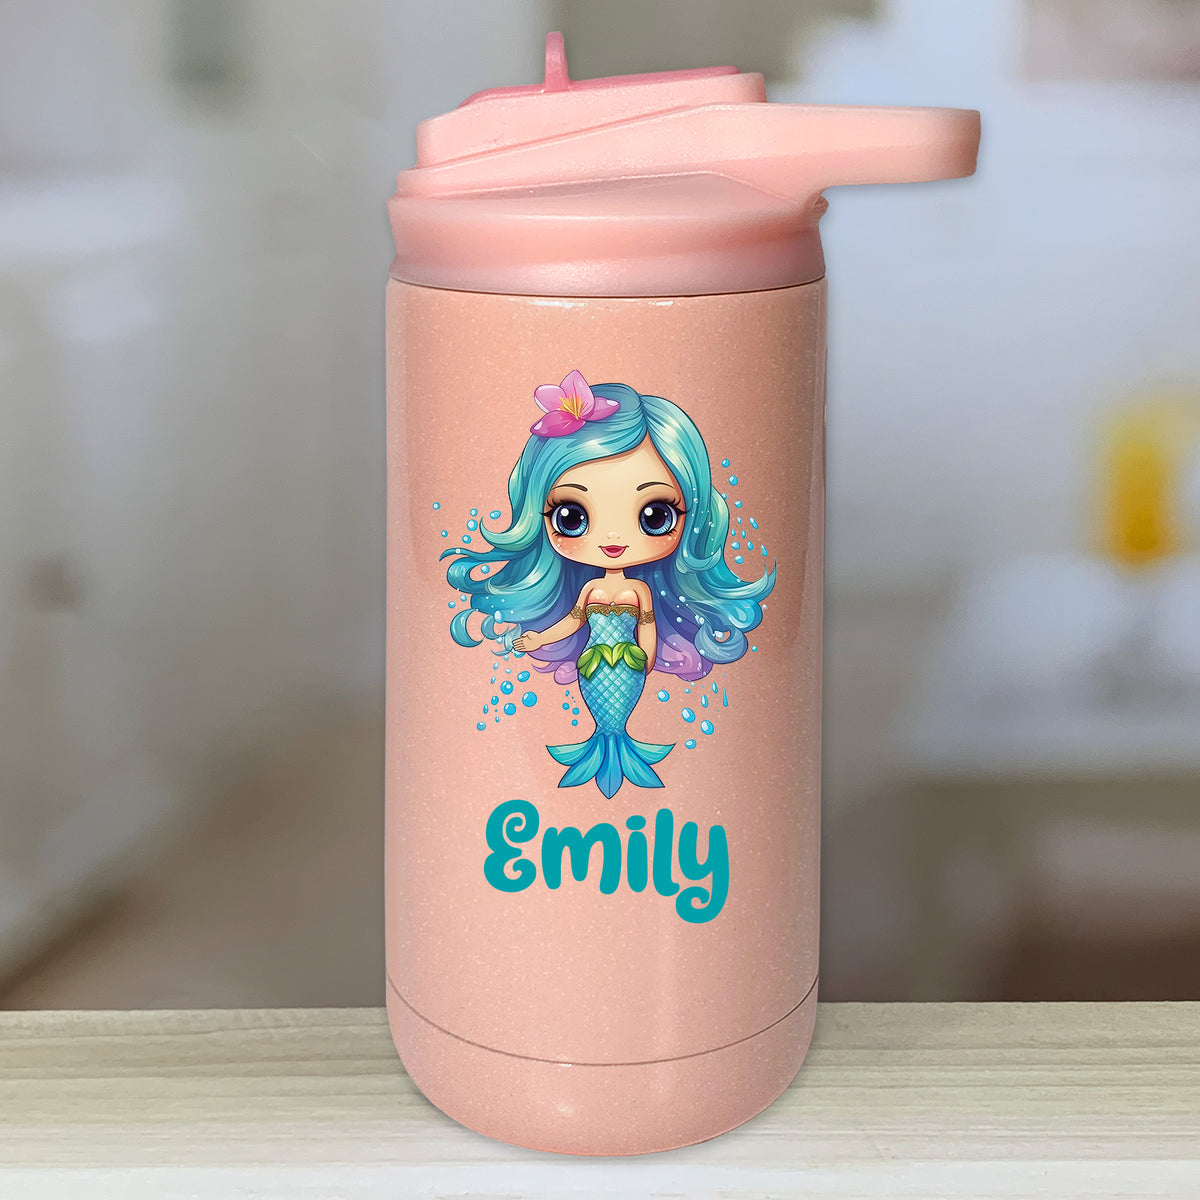 Personalized Princess Water Bottle